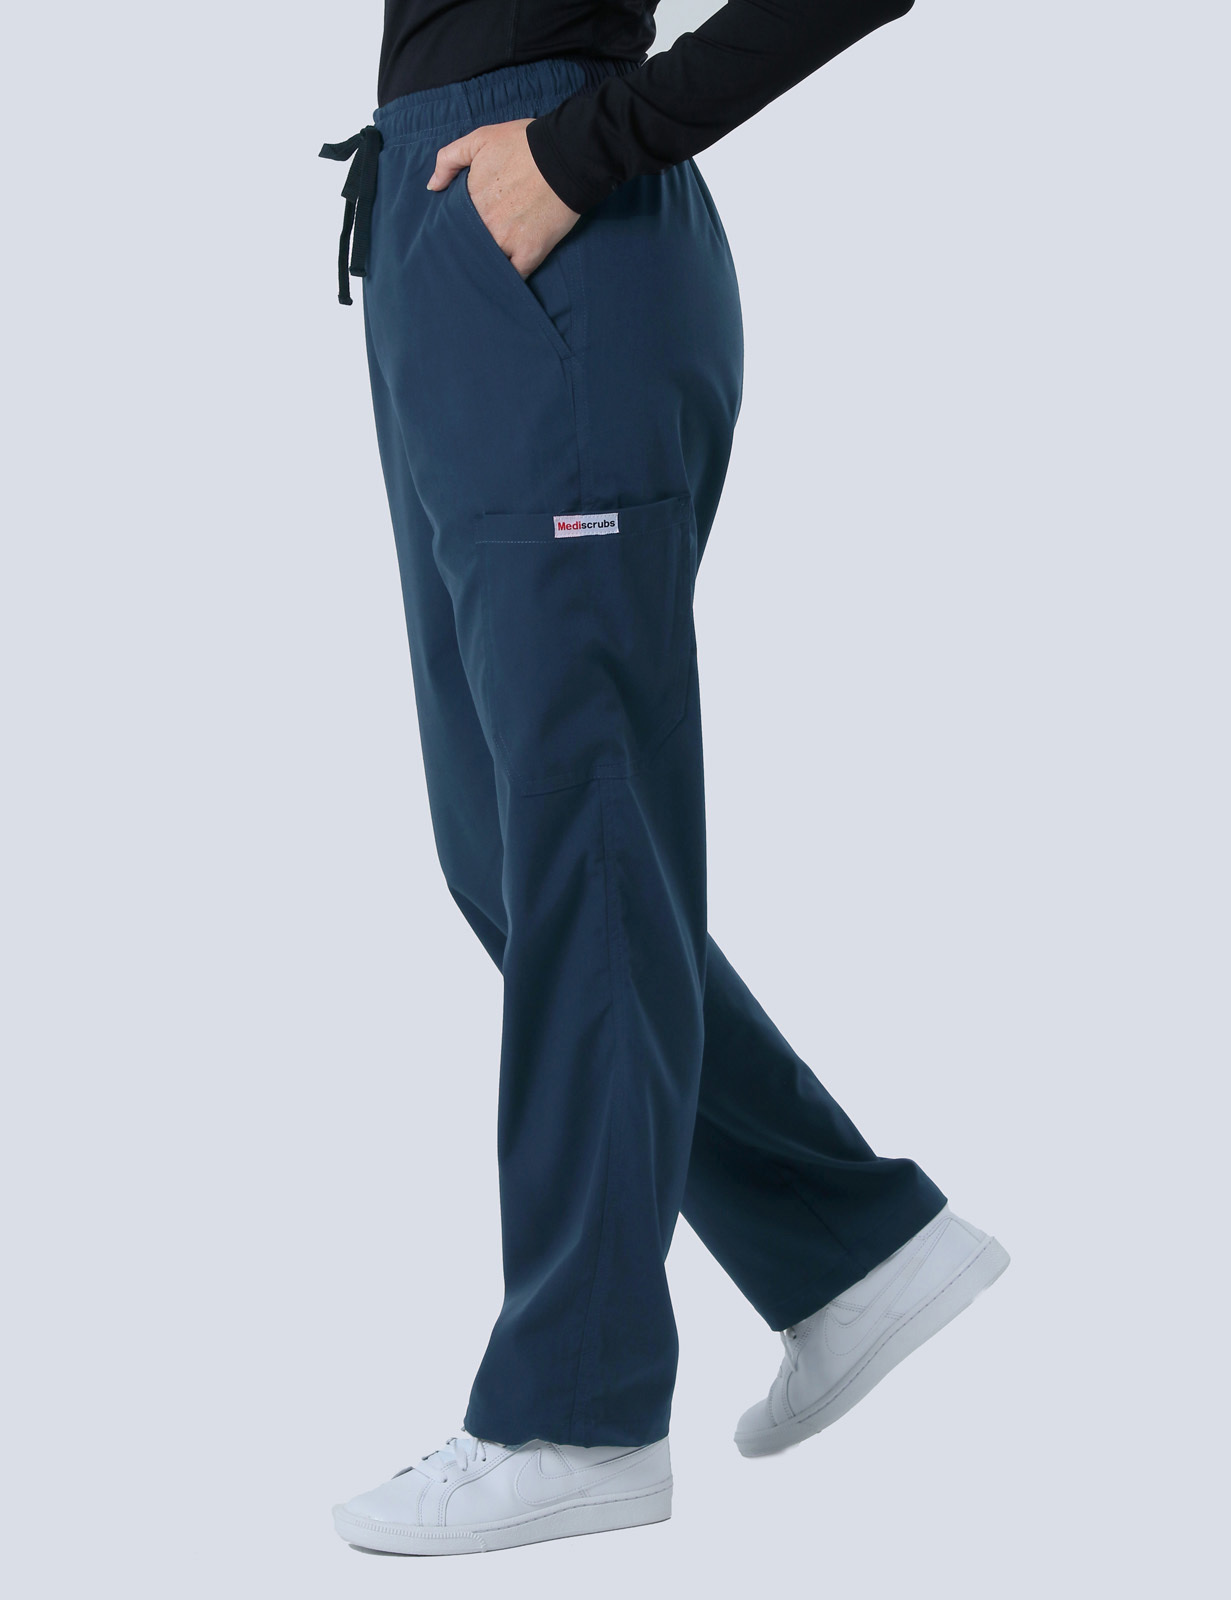 Peninsula Health - AAAU/Nurse (4 Pocket Scrub Top and Cargo Pants in Navy incl Logos)